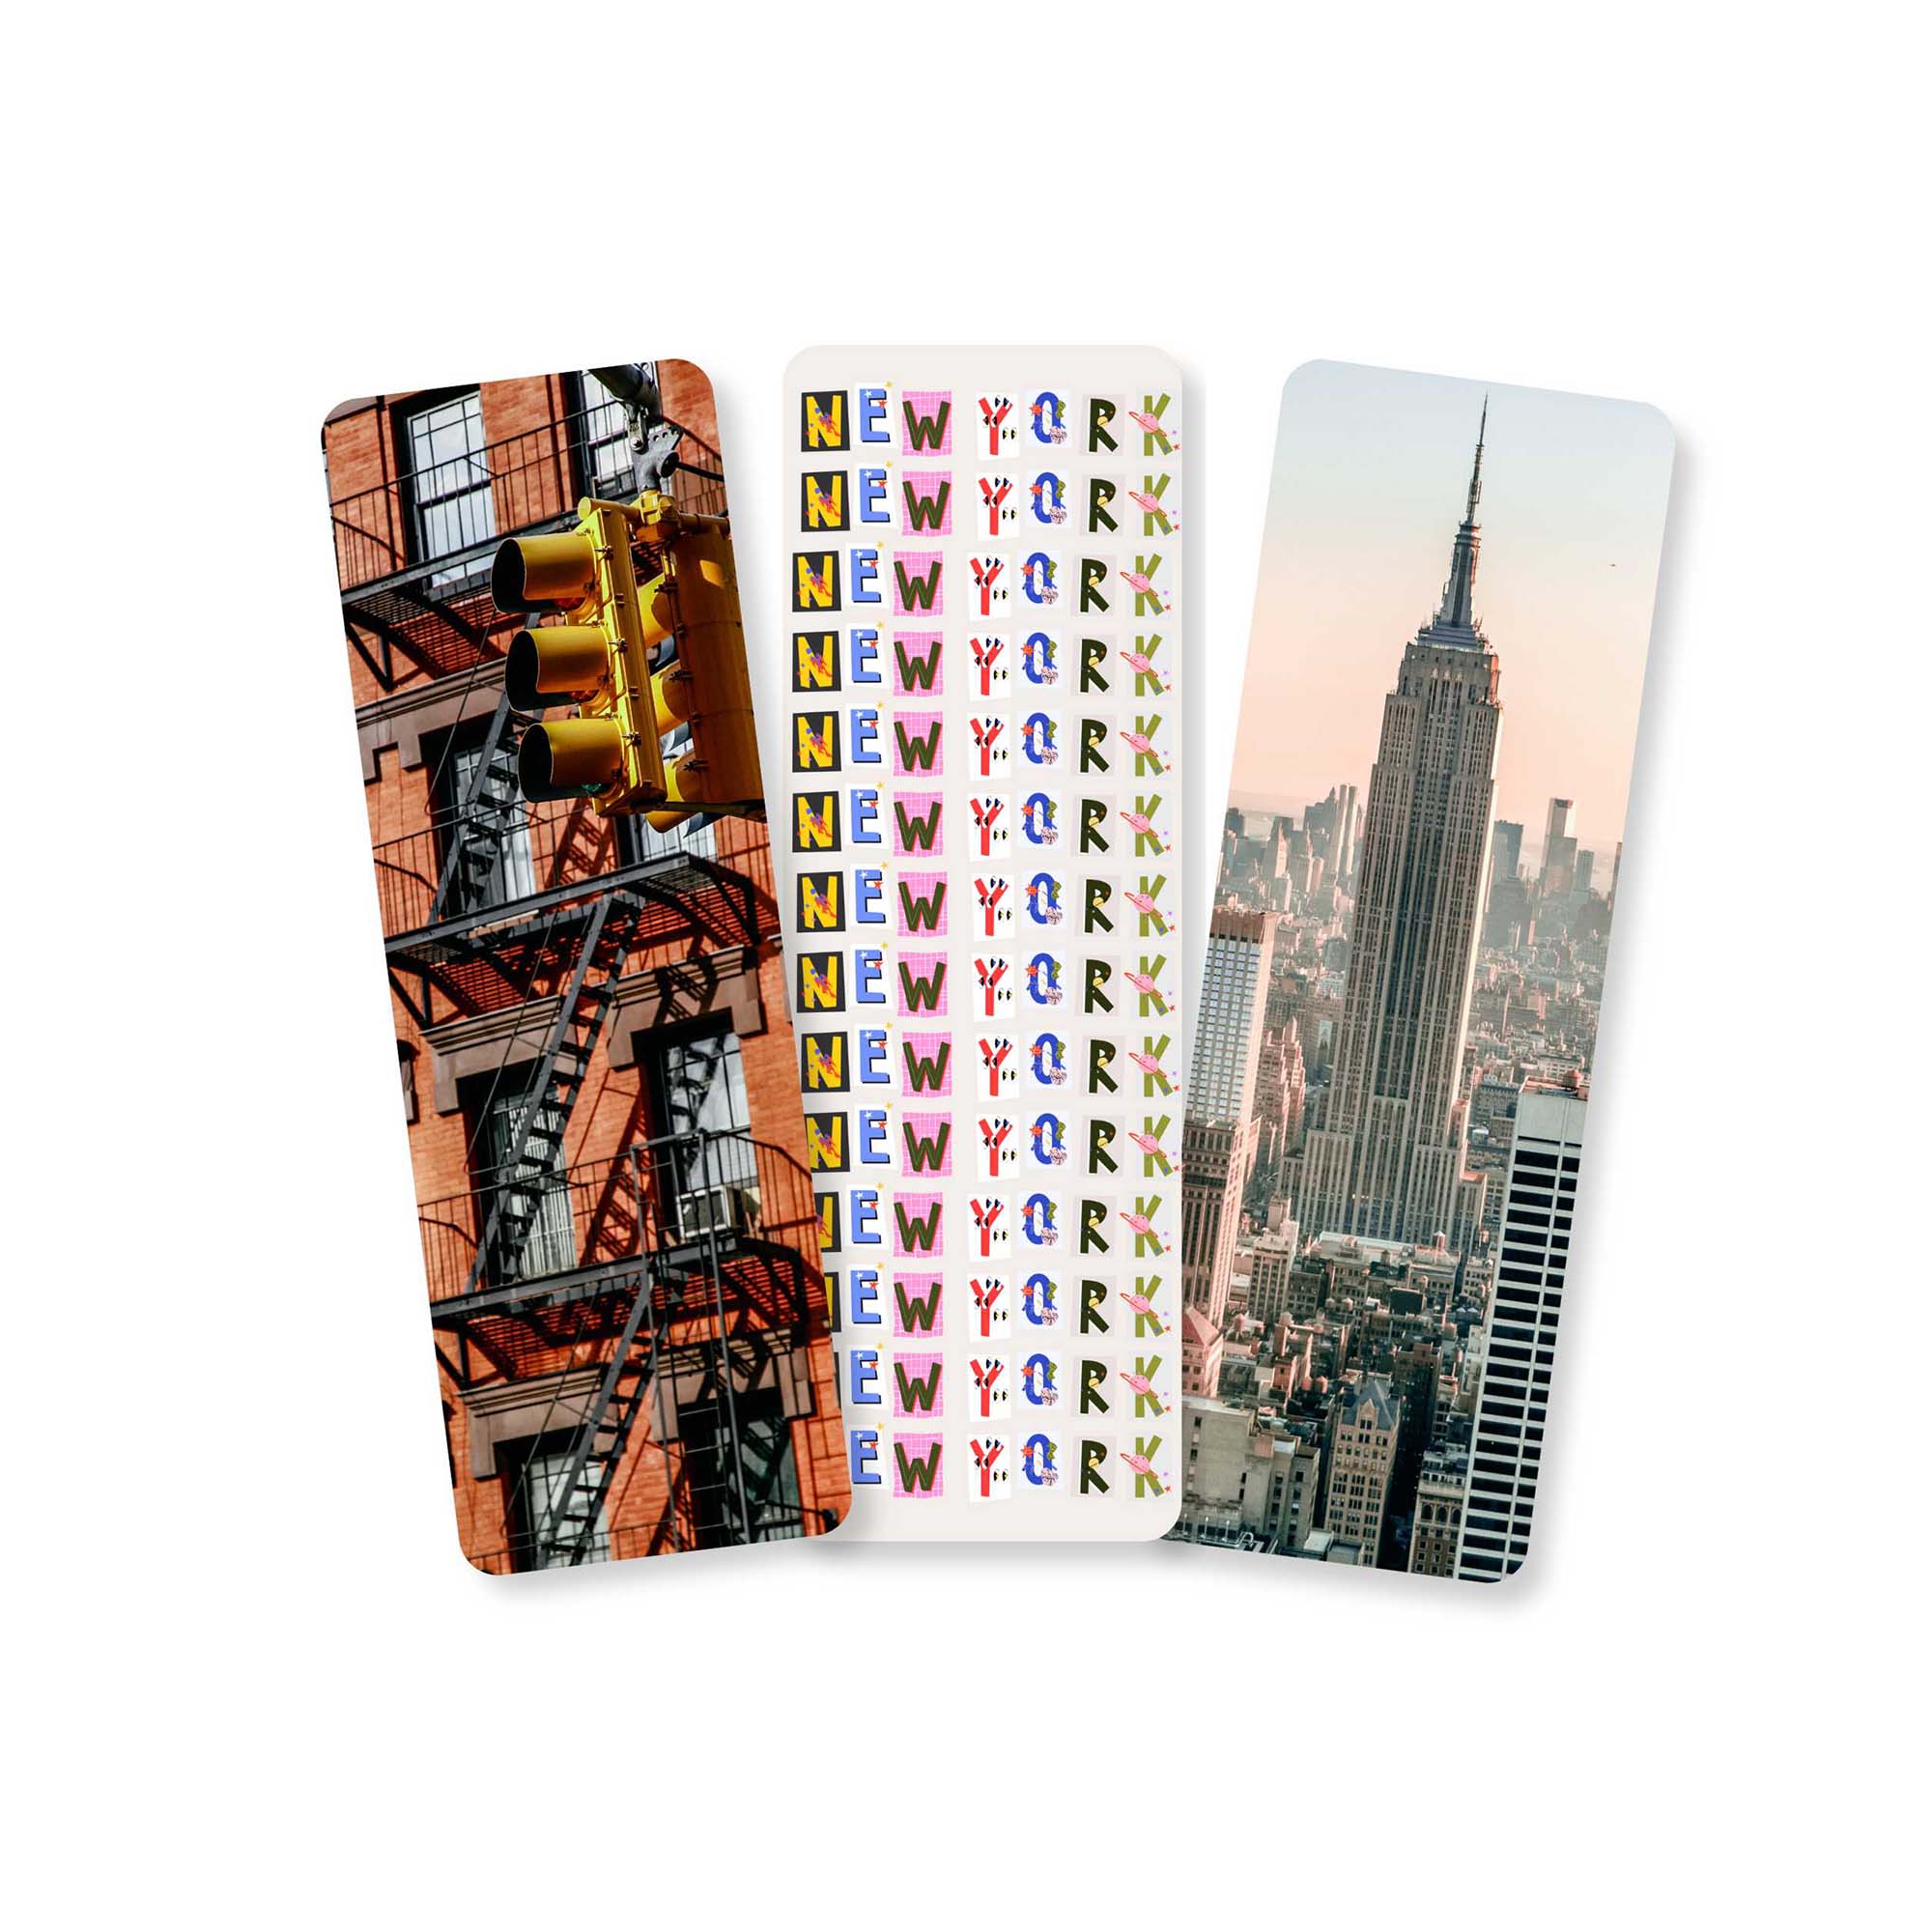 New York bookmarks